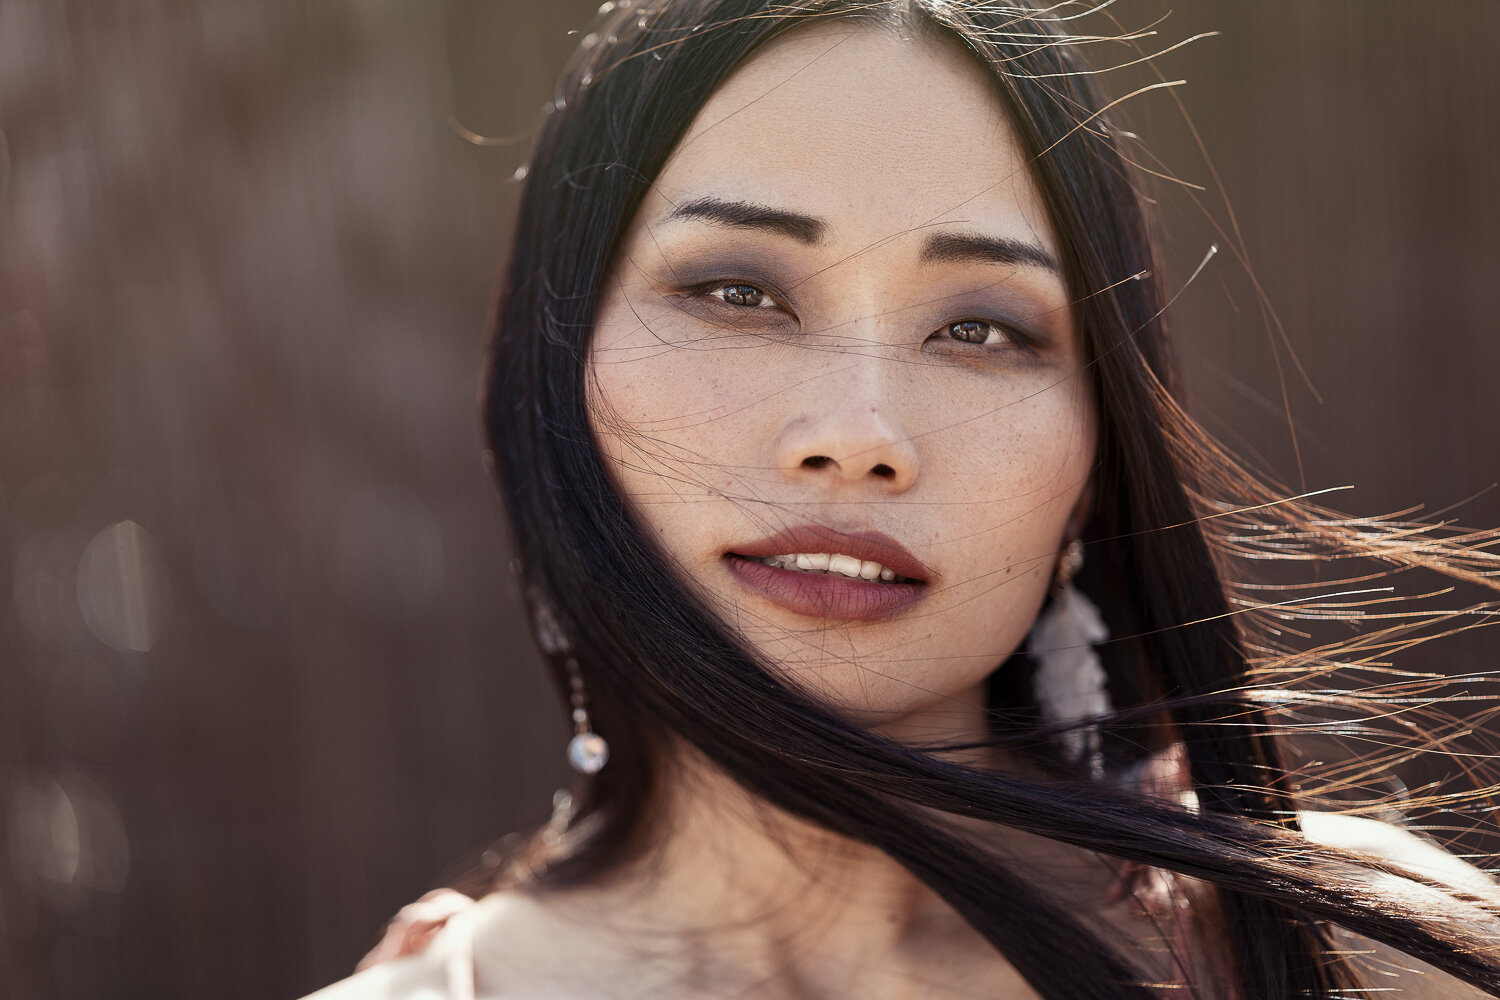  Model: Xu  MUAH:  Makeup 101  